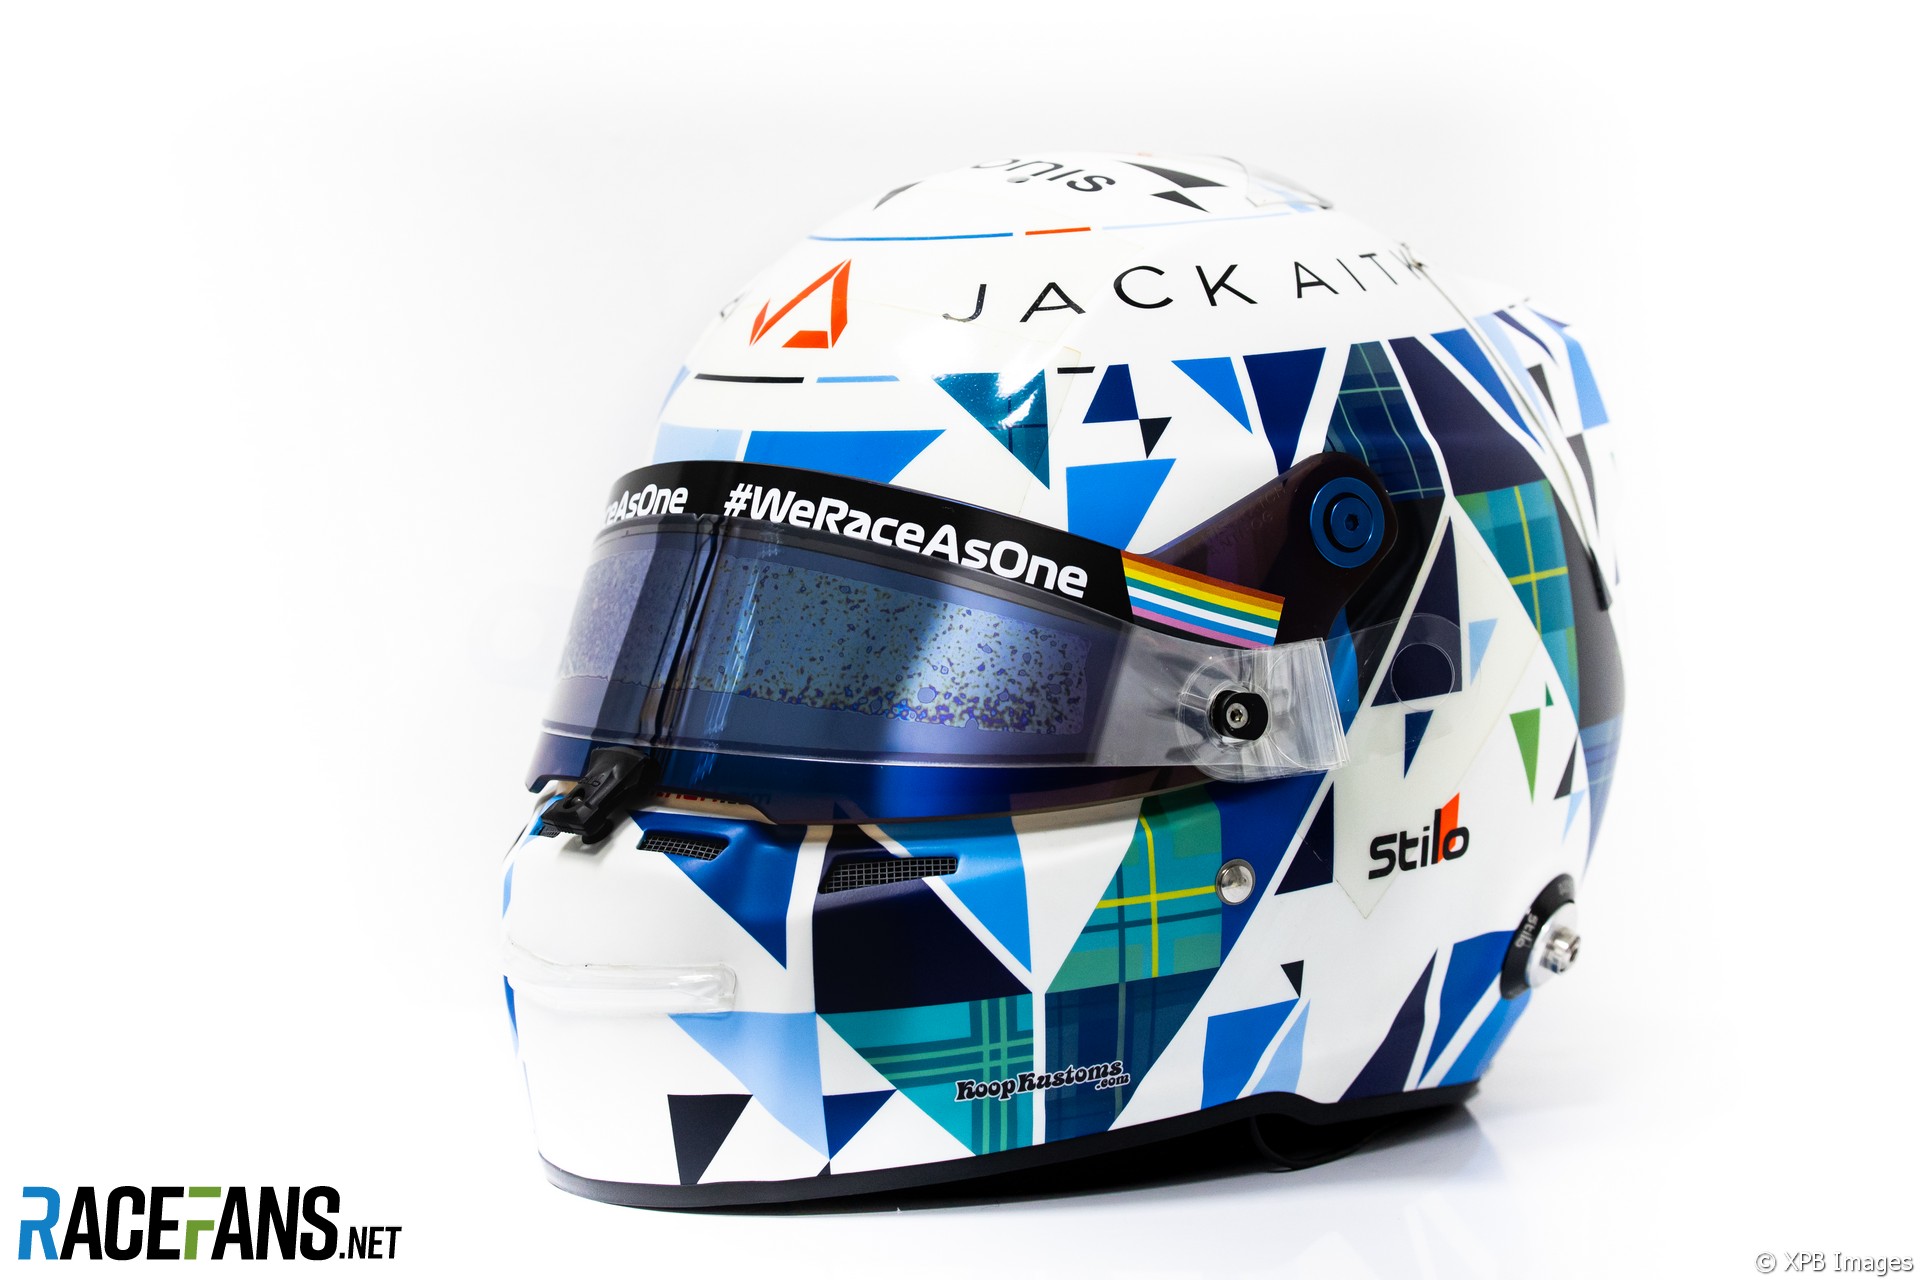 Jack Aitken's helmet, Bahrain International Circuit, 2020